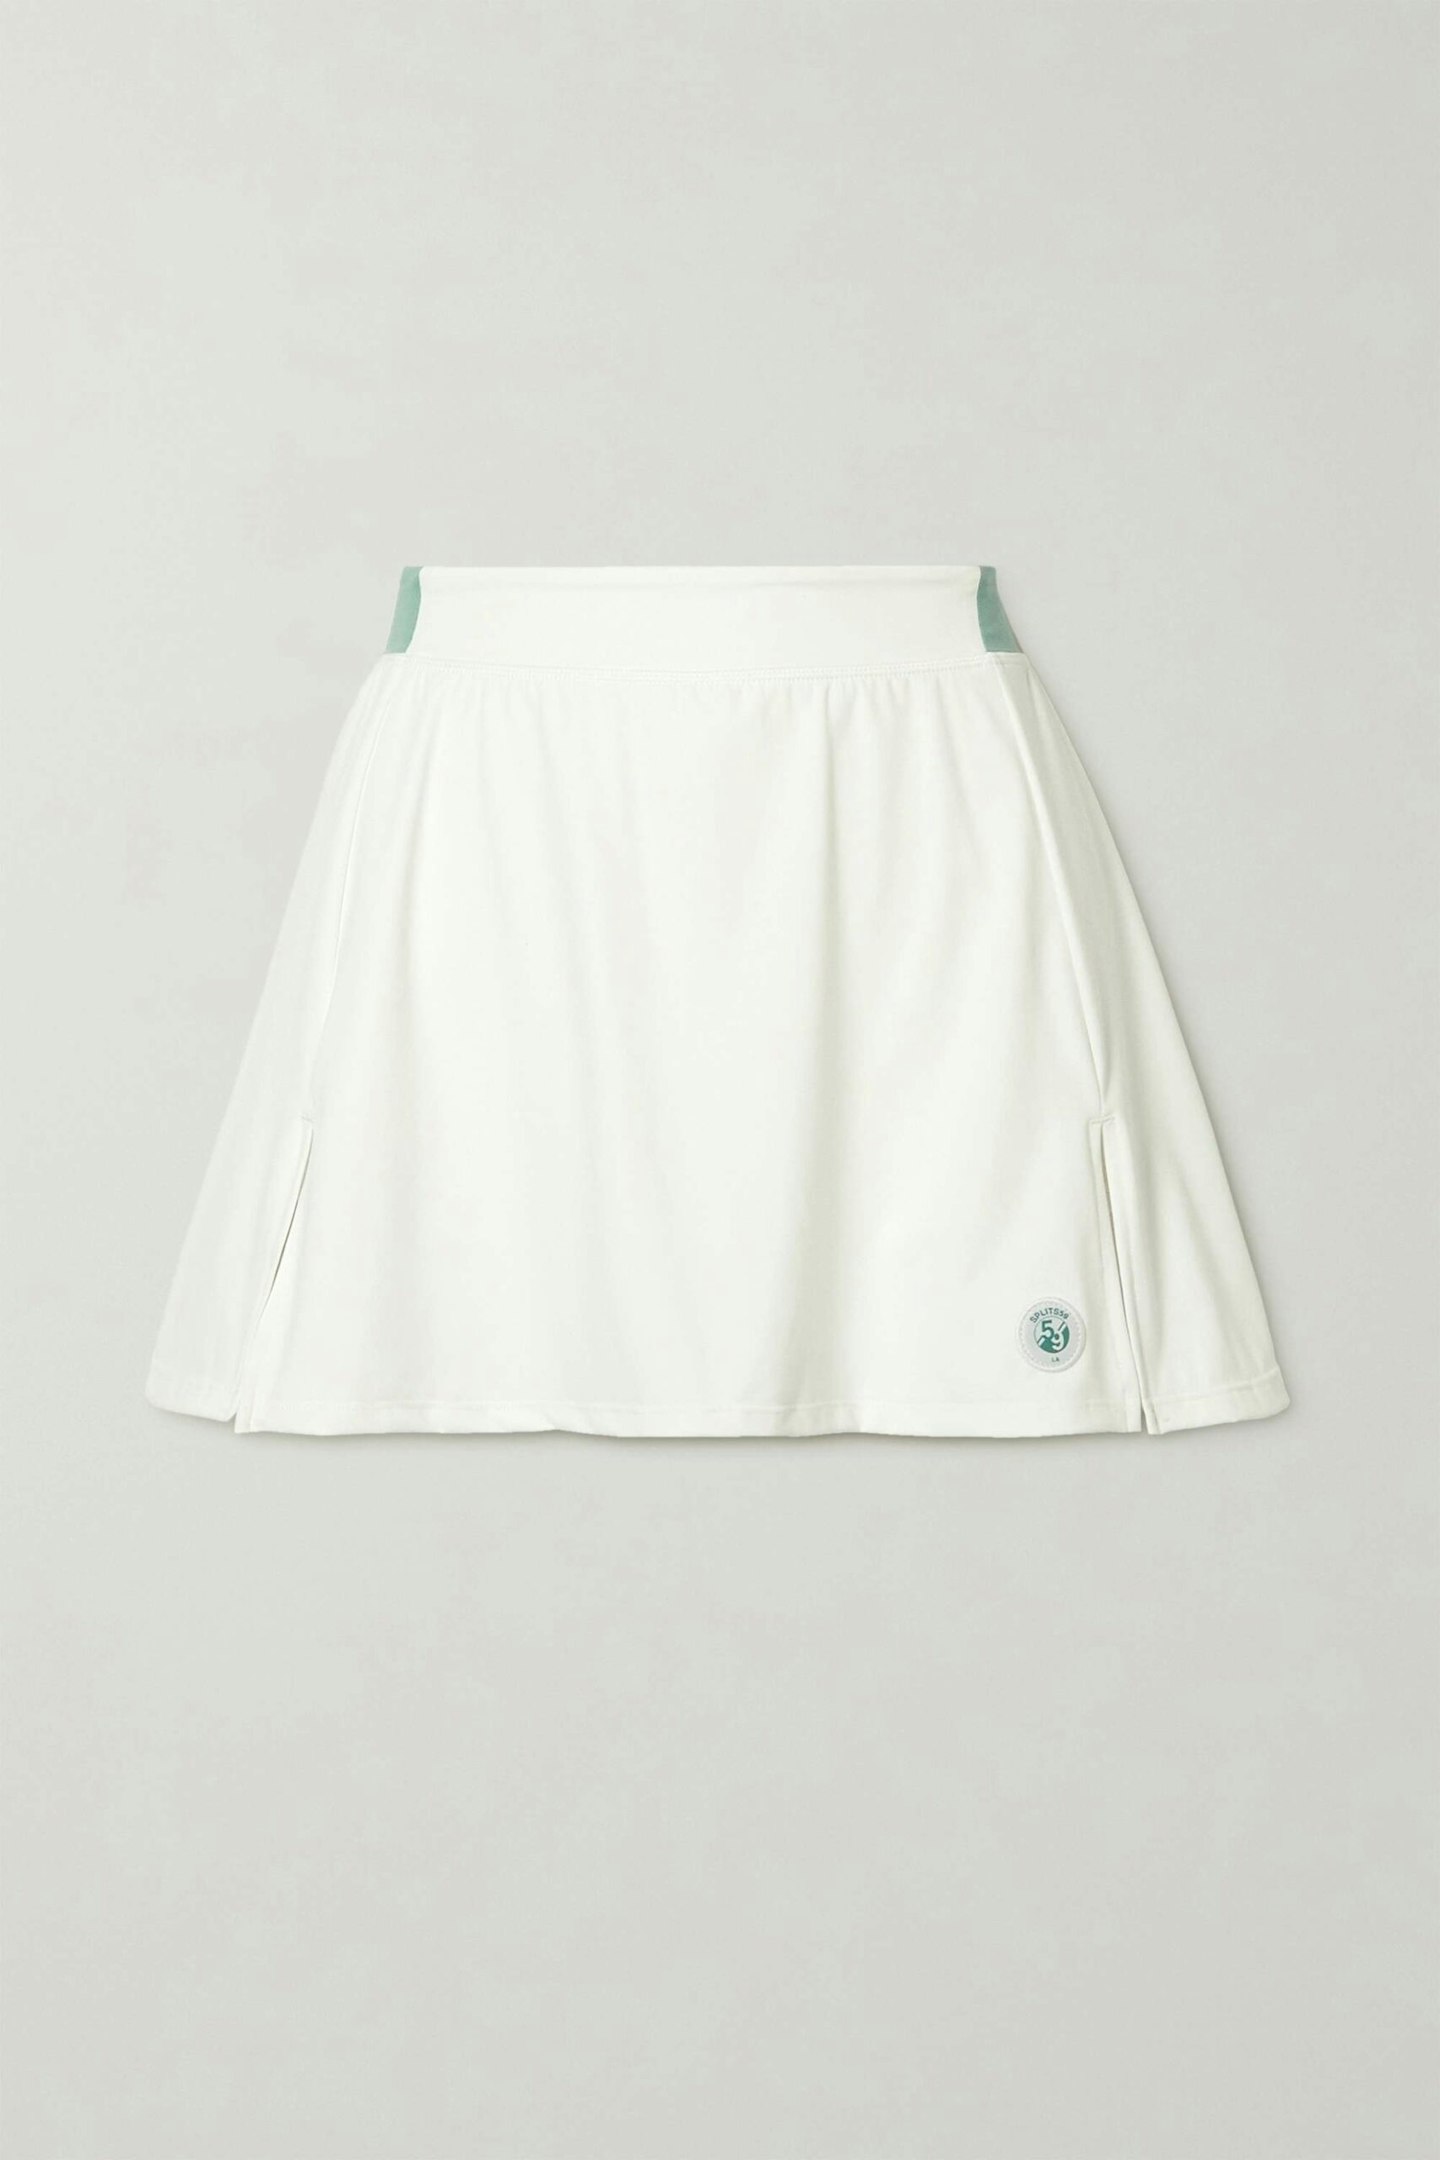 Split59, Venus Two-Tone Stretch Tennis Skirt